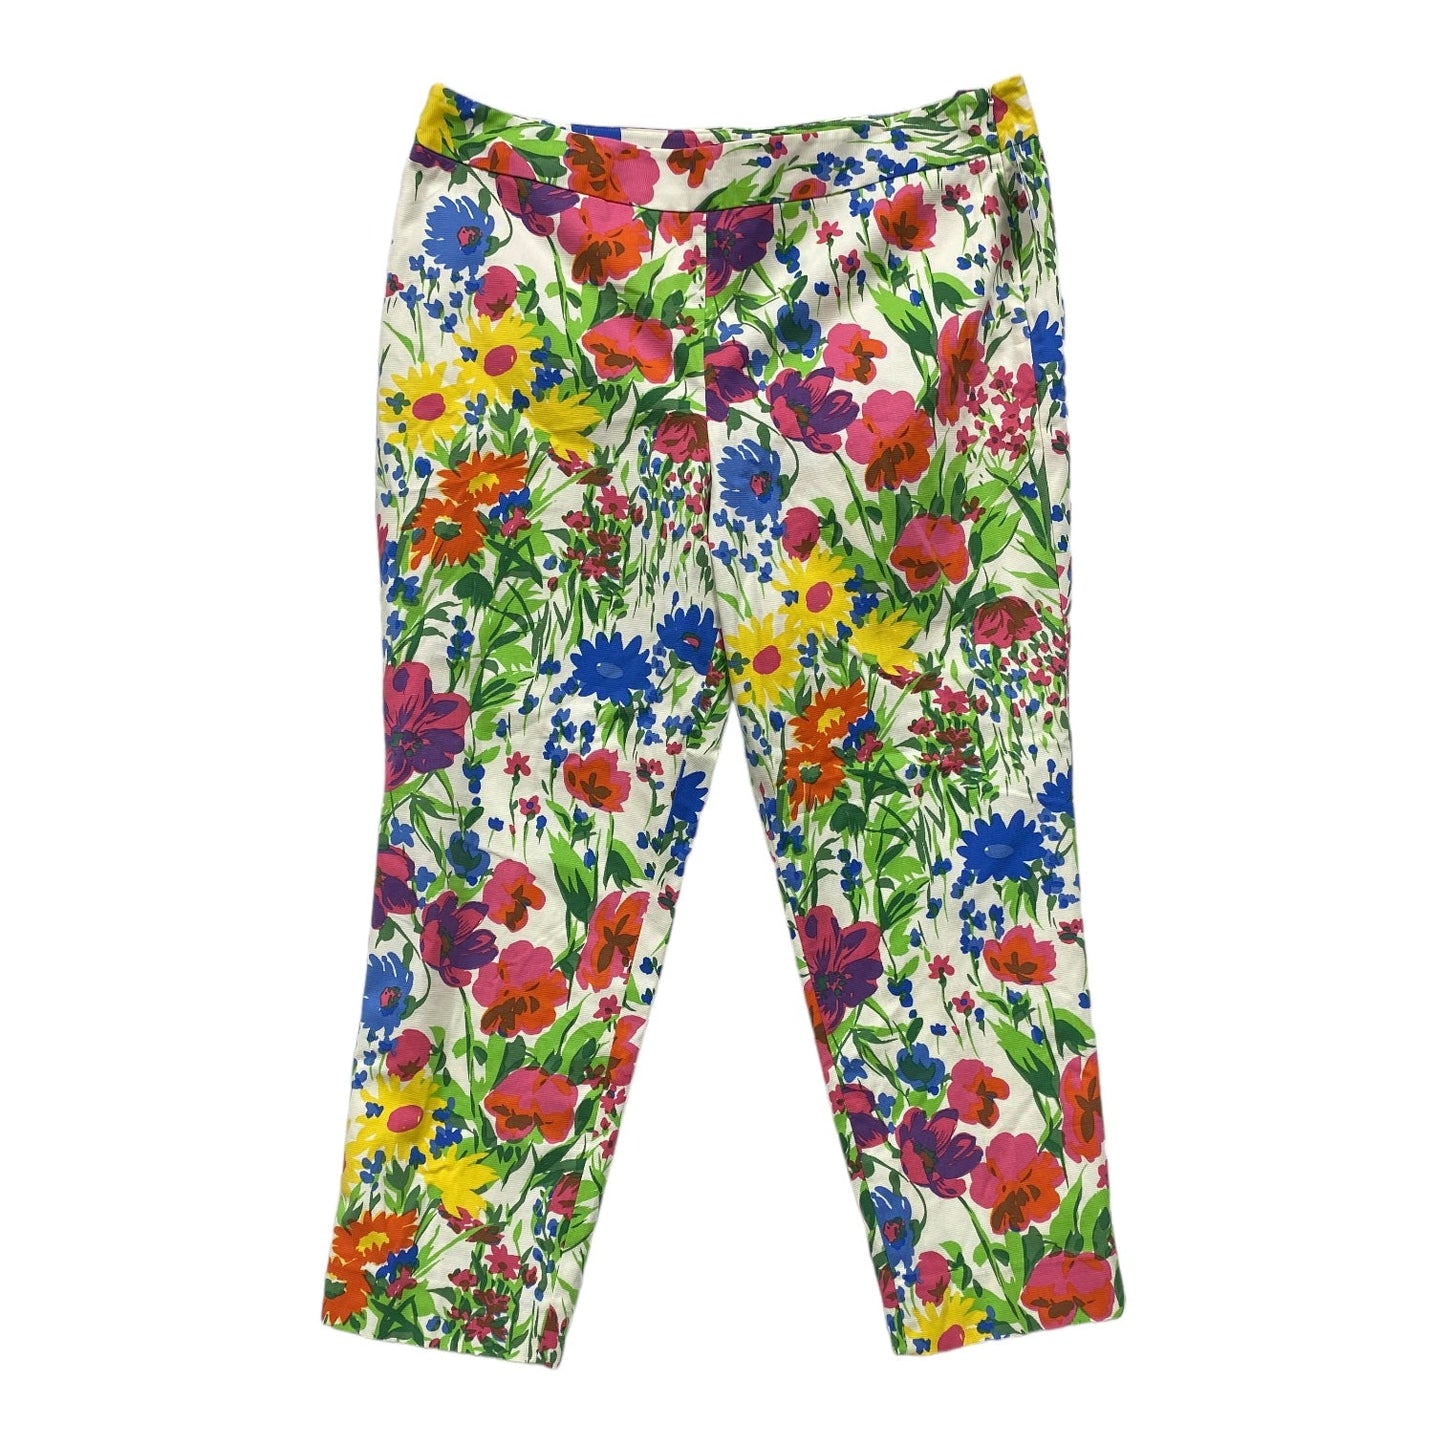 Floral Print Pants Cropped Talbots, Size 16